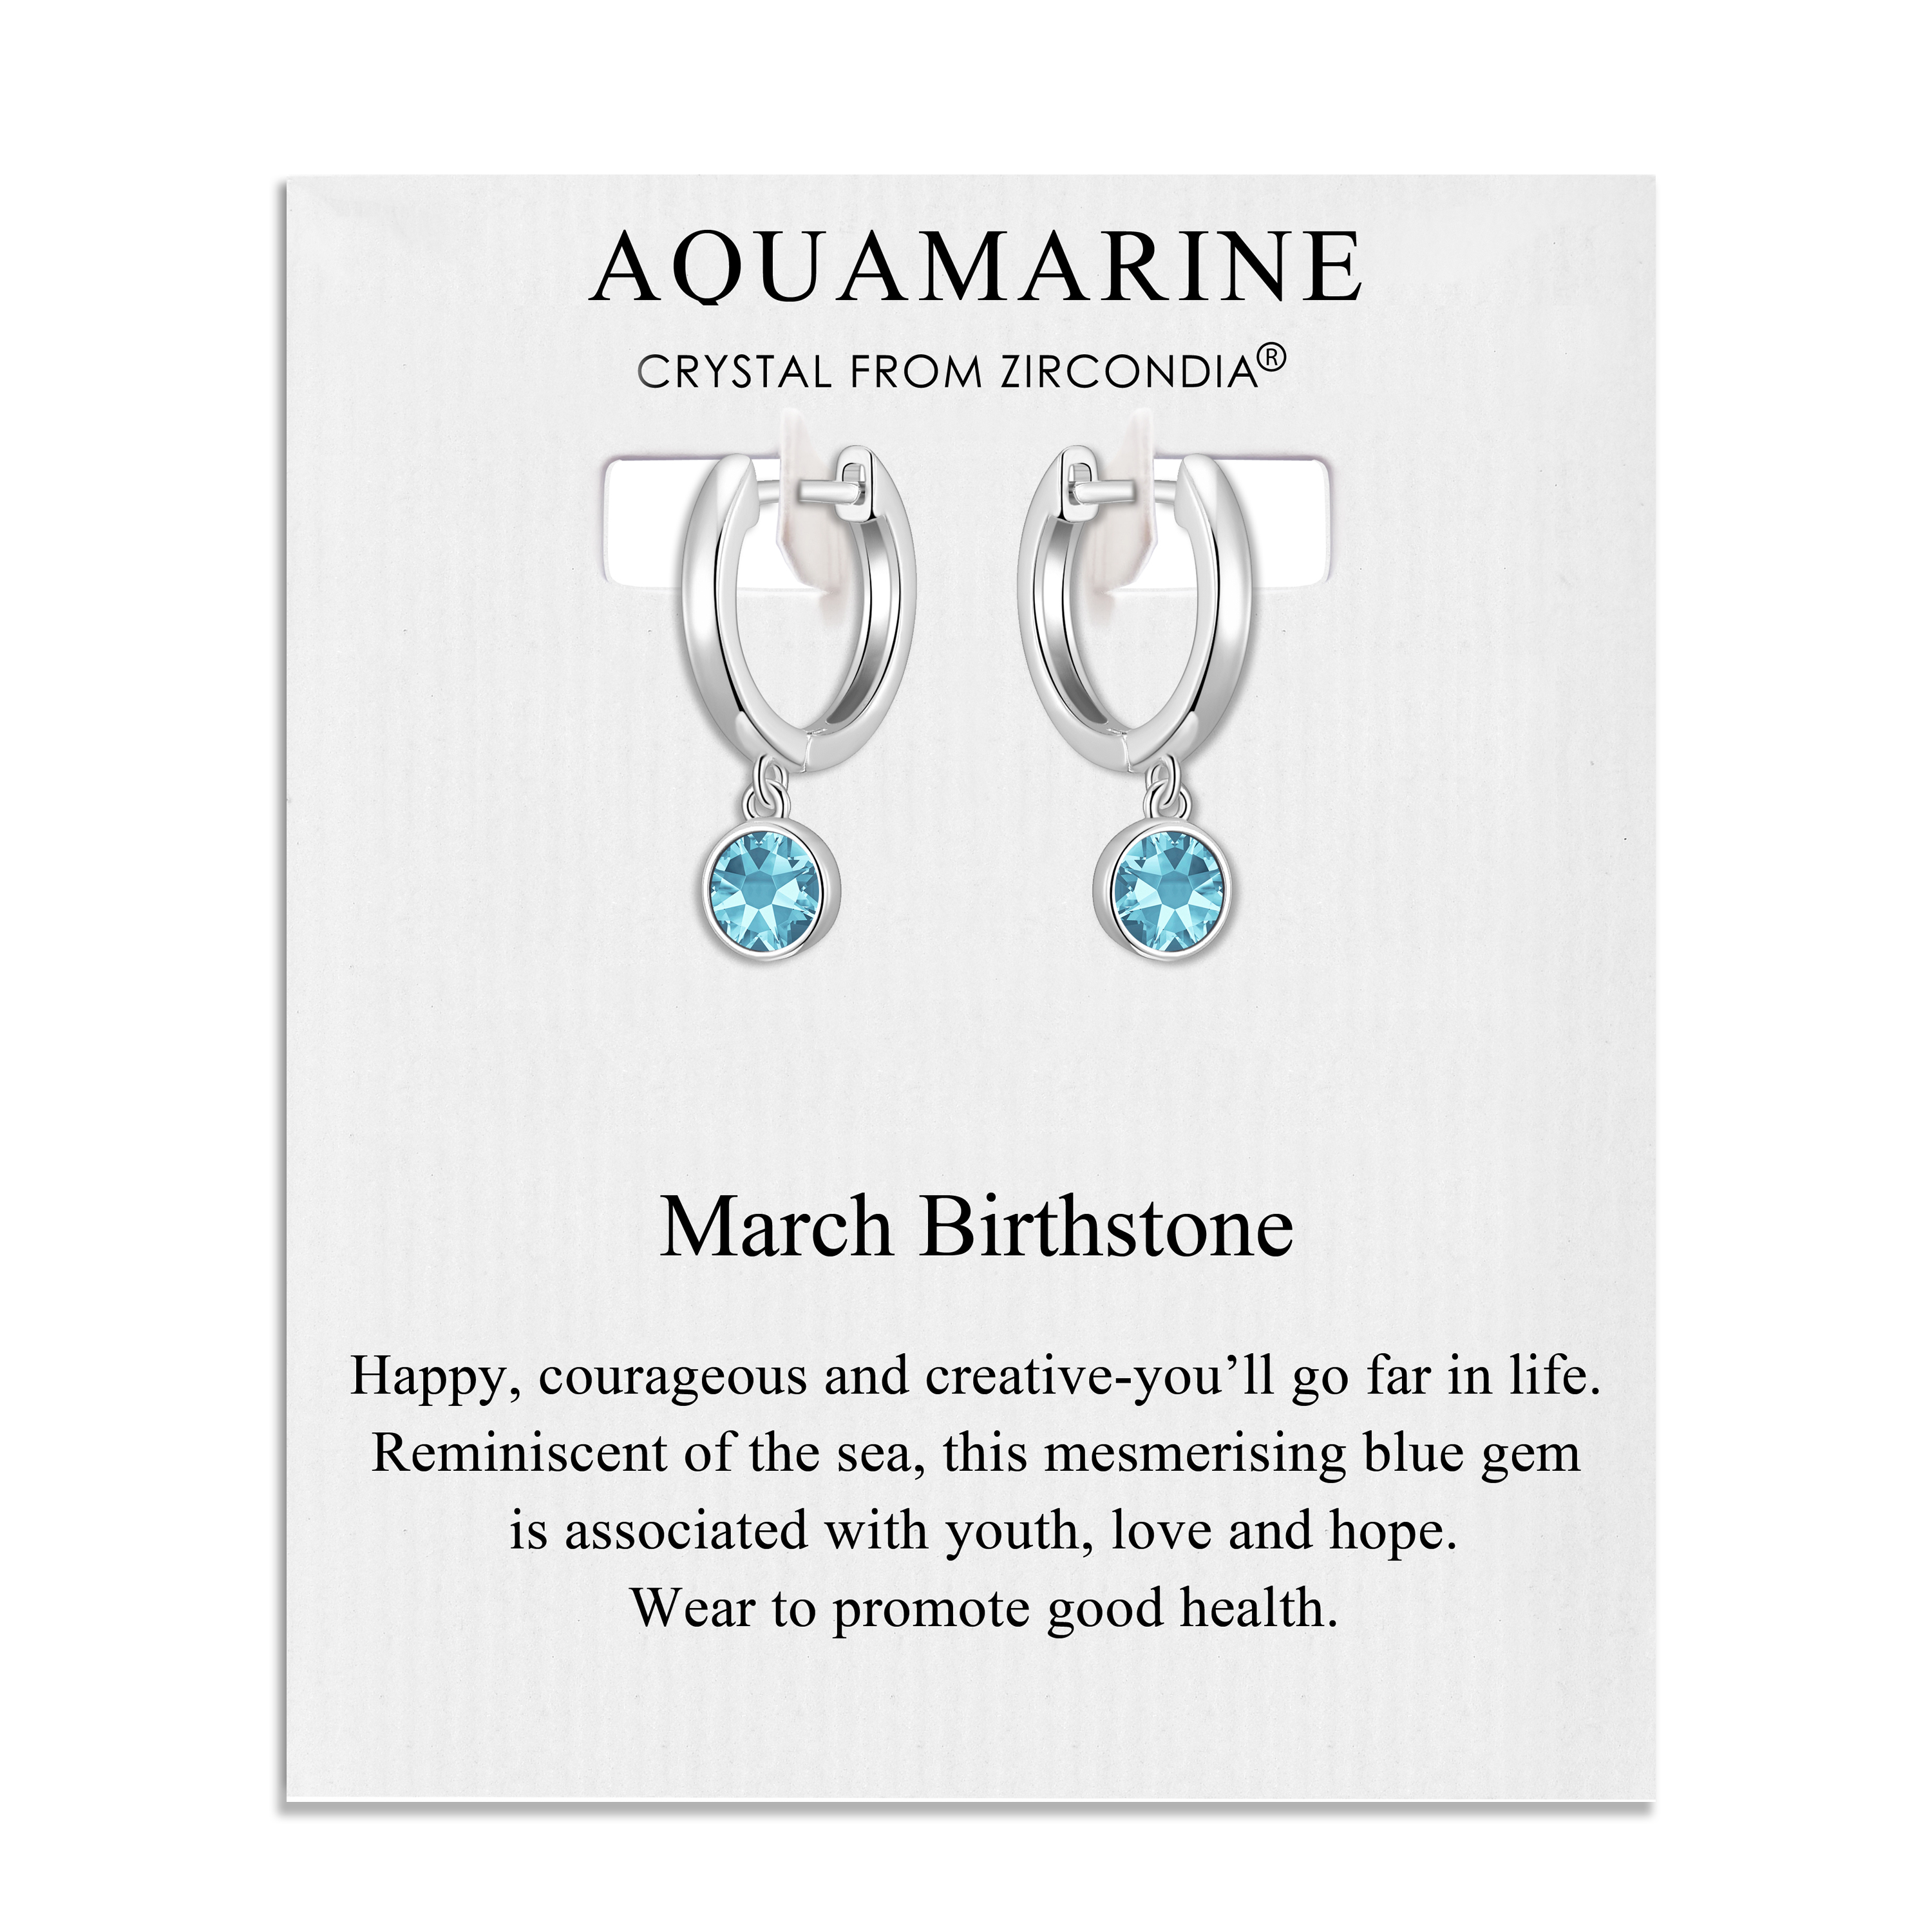 March Birthstone Hoop Earrings Created with Aquamarine Zircondia® Crystals by Philip Jones Jewellery